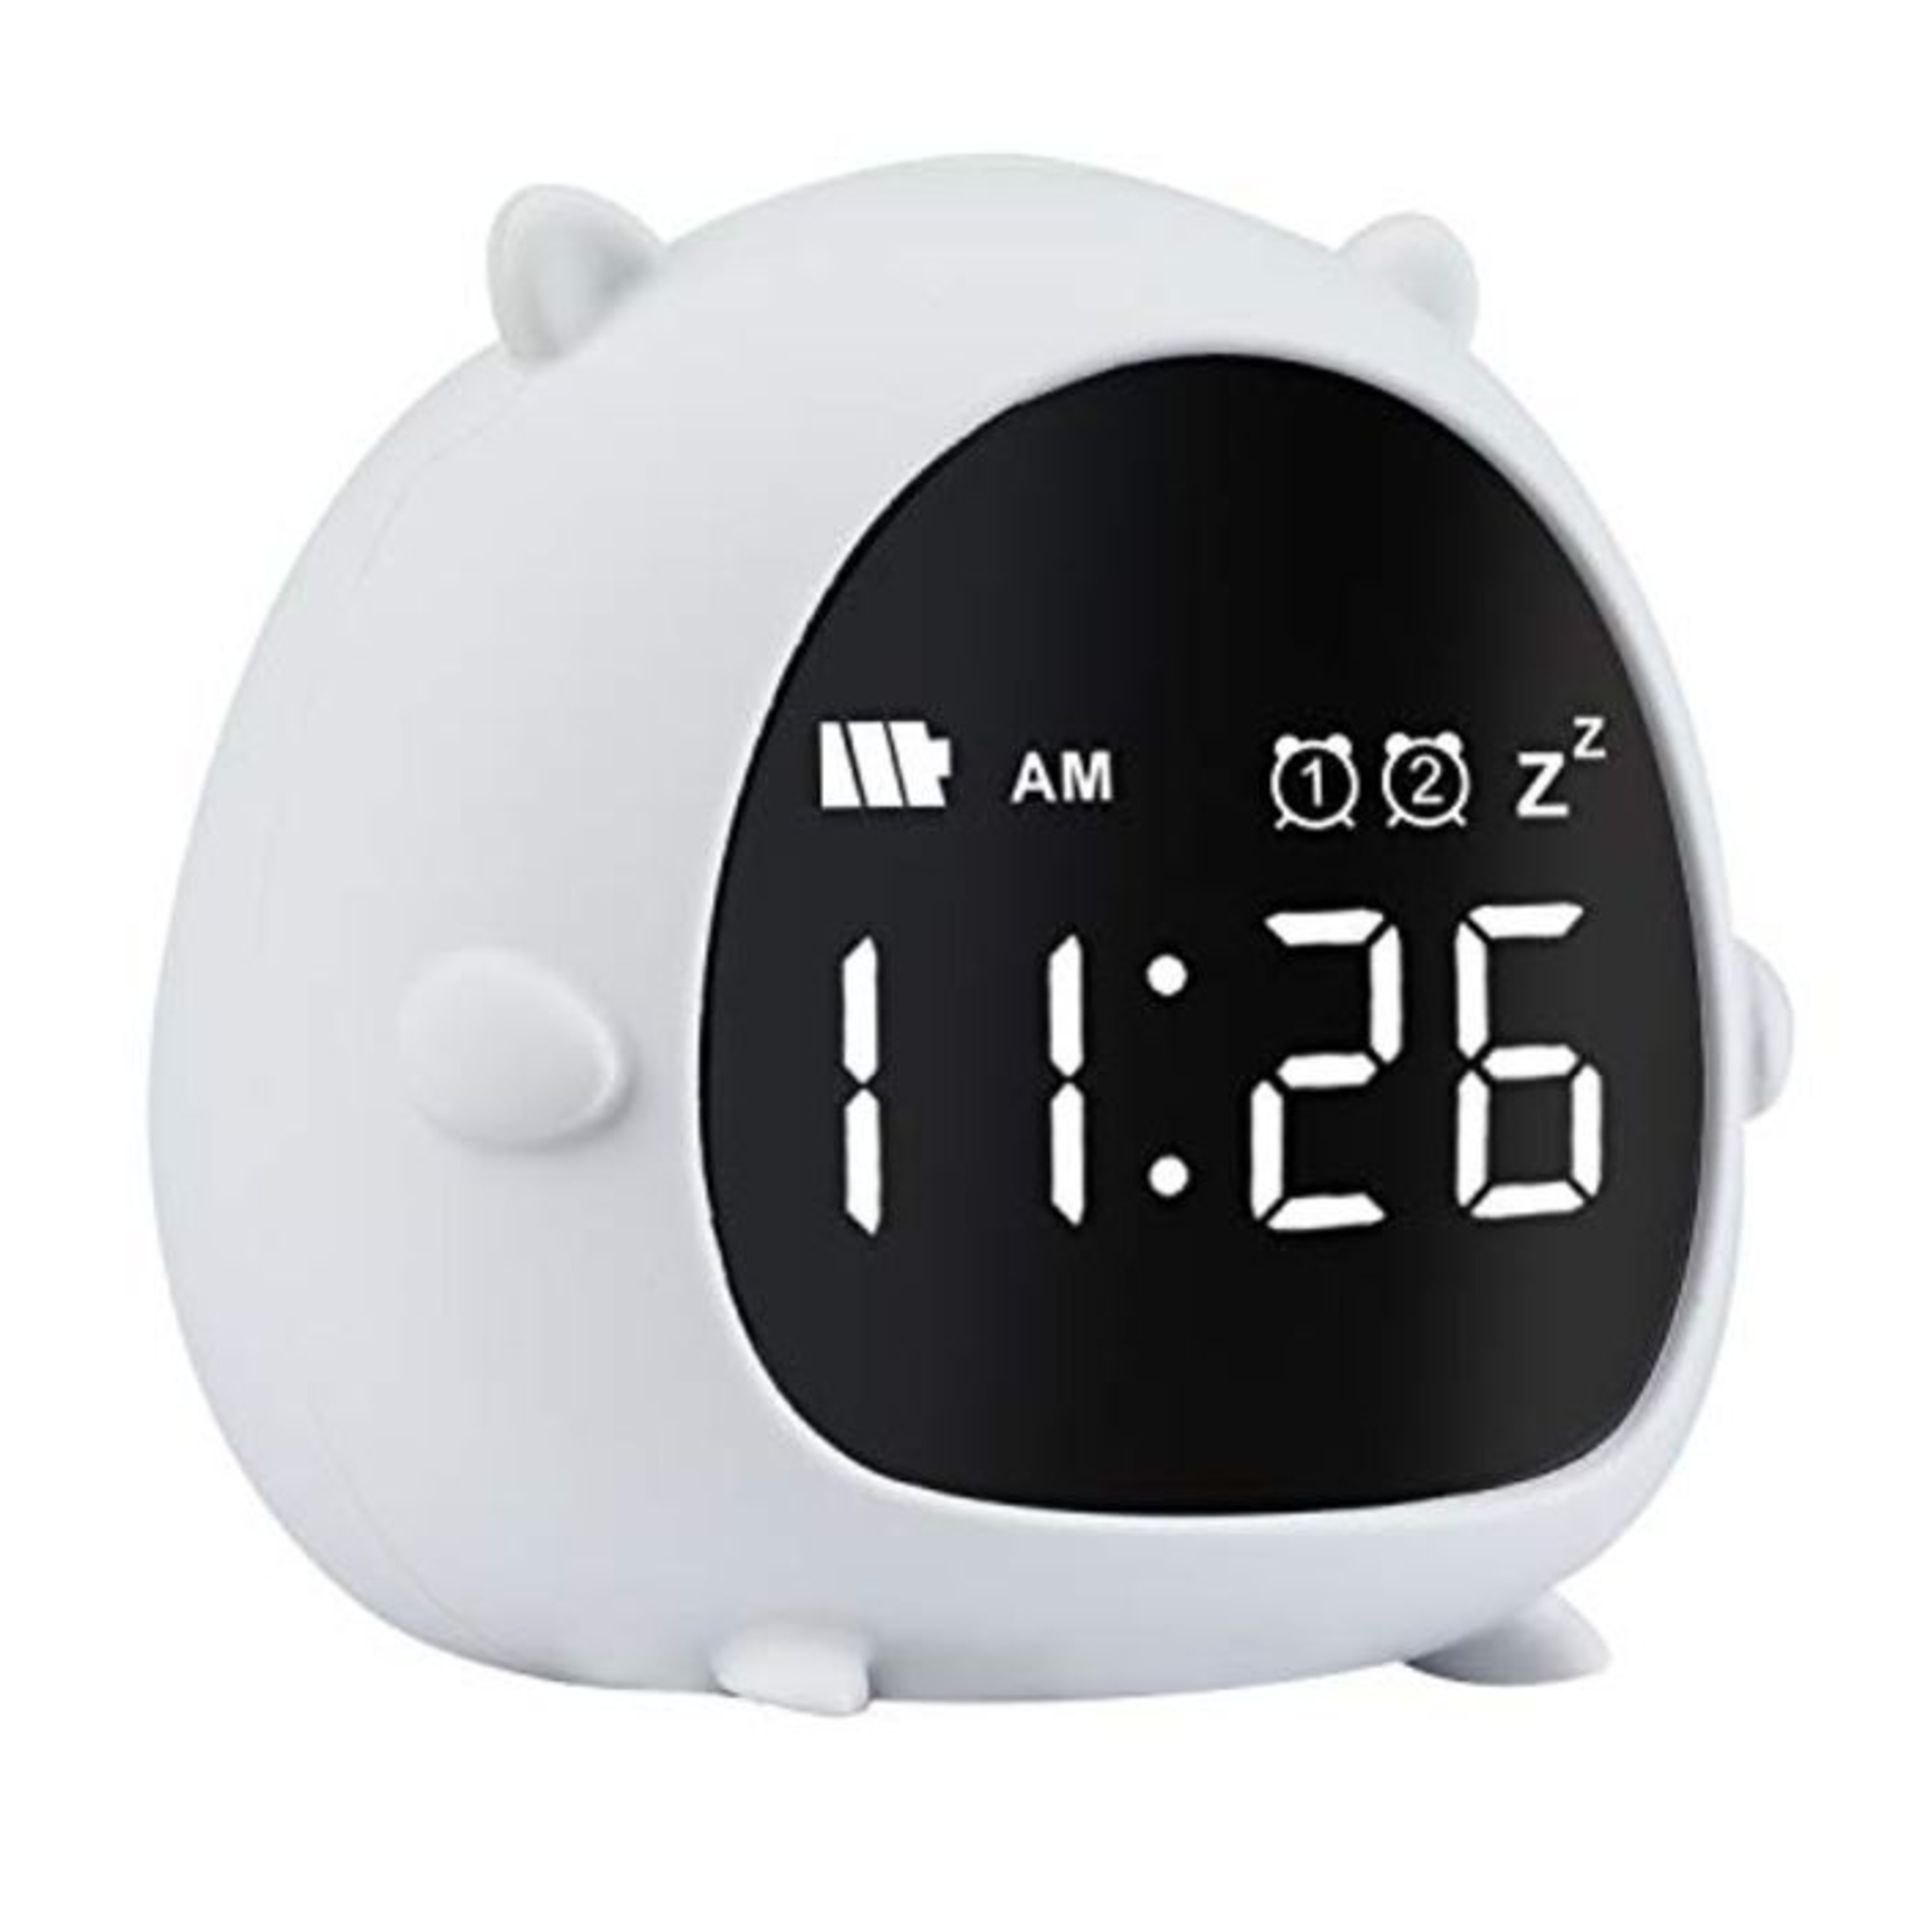 ZKIAH Kids Alarm Clock Digital,Cute Children Wake Up Clock Bedside with Countdown/Snoo